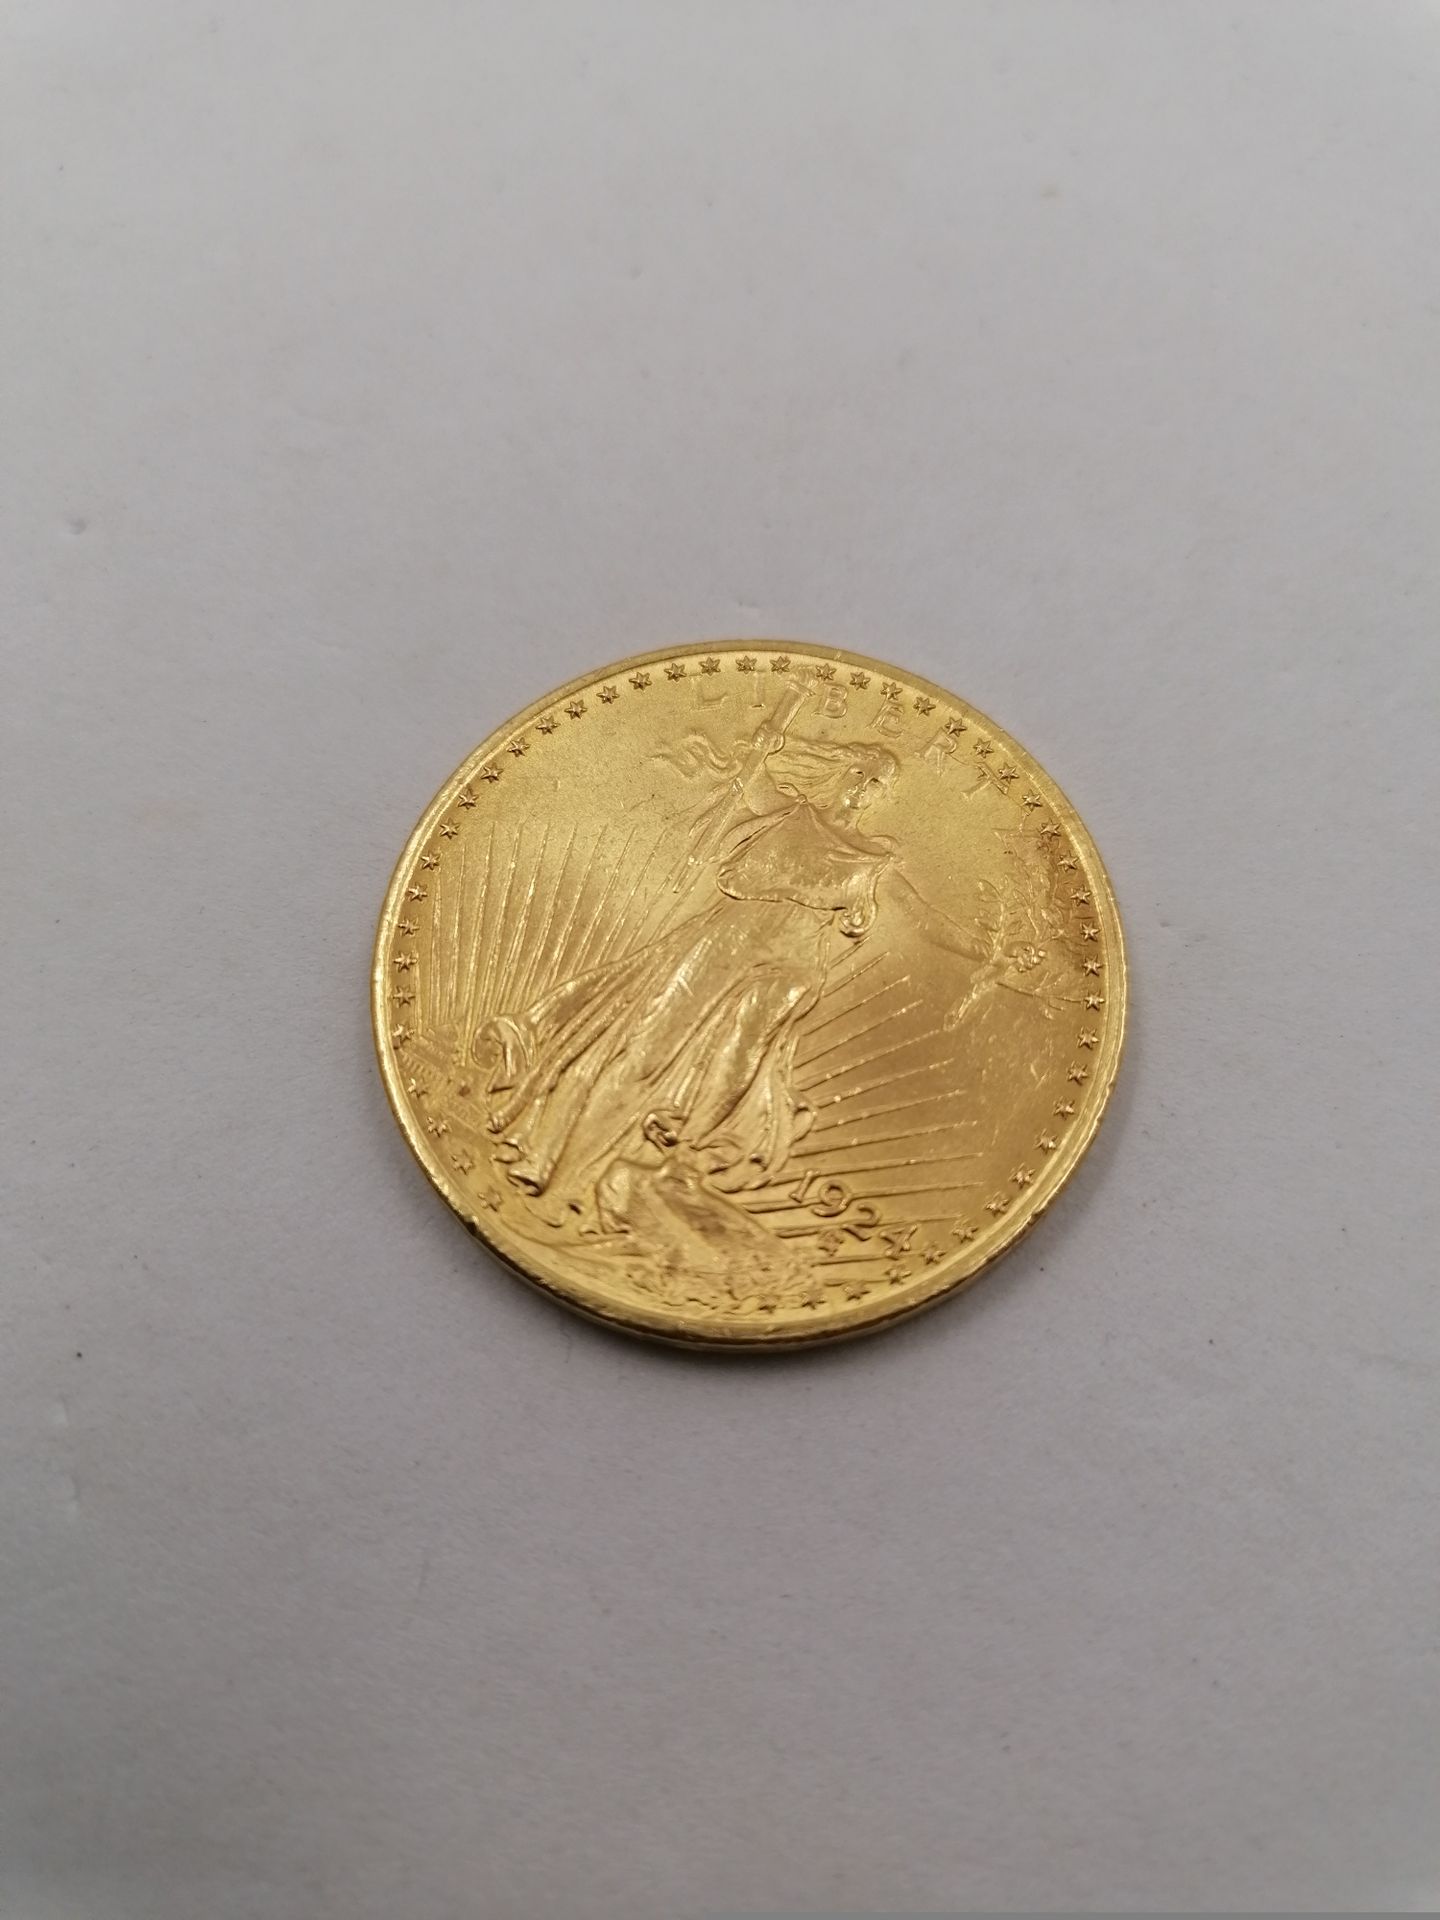 Null 1 Moneta d'oro 900°/oo 33,43 g 20 dollari 1924 Saint Gaudens